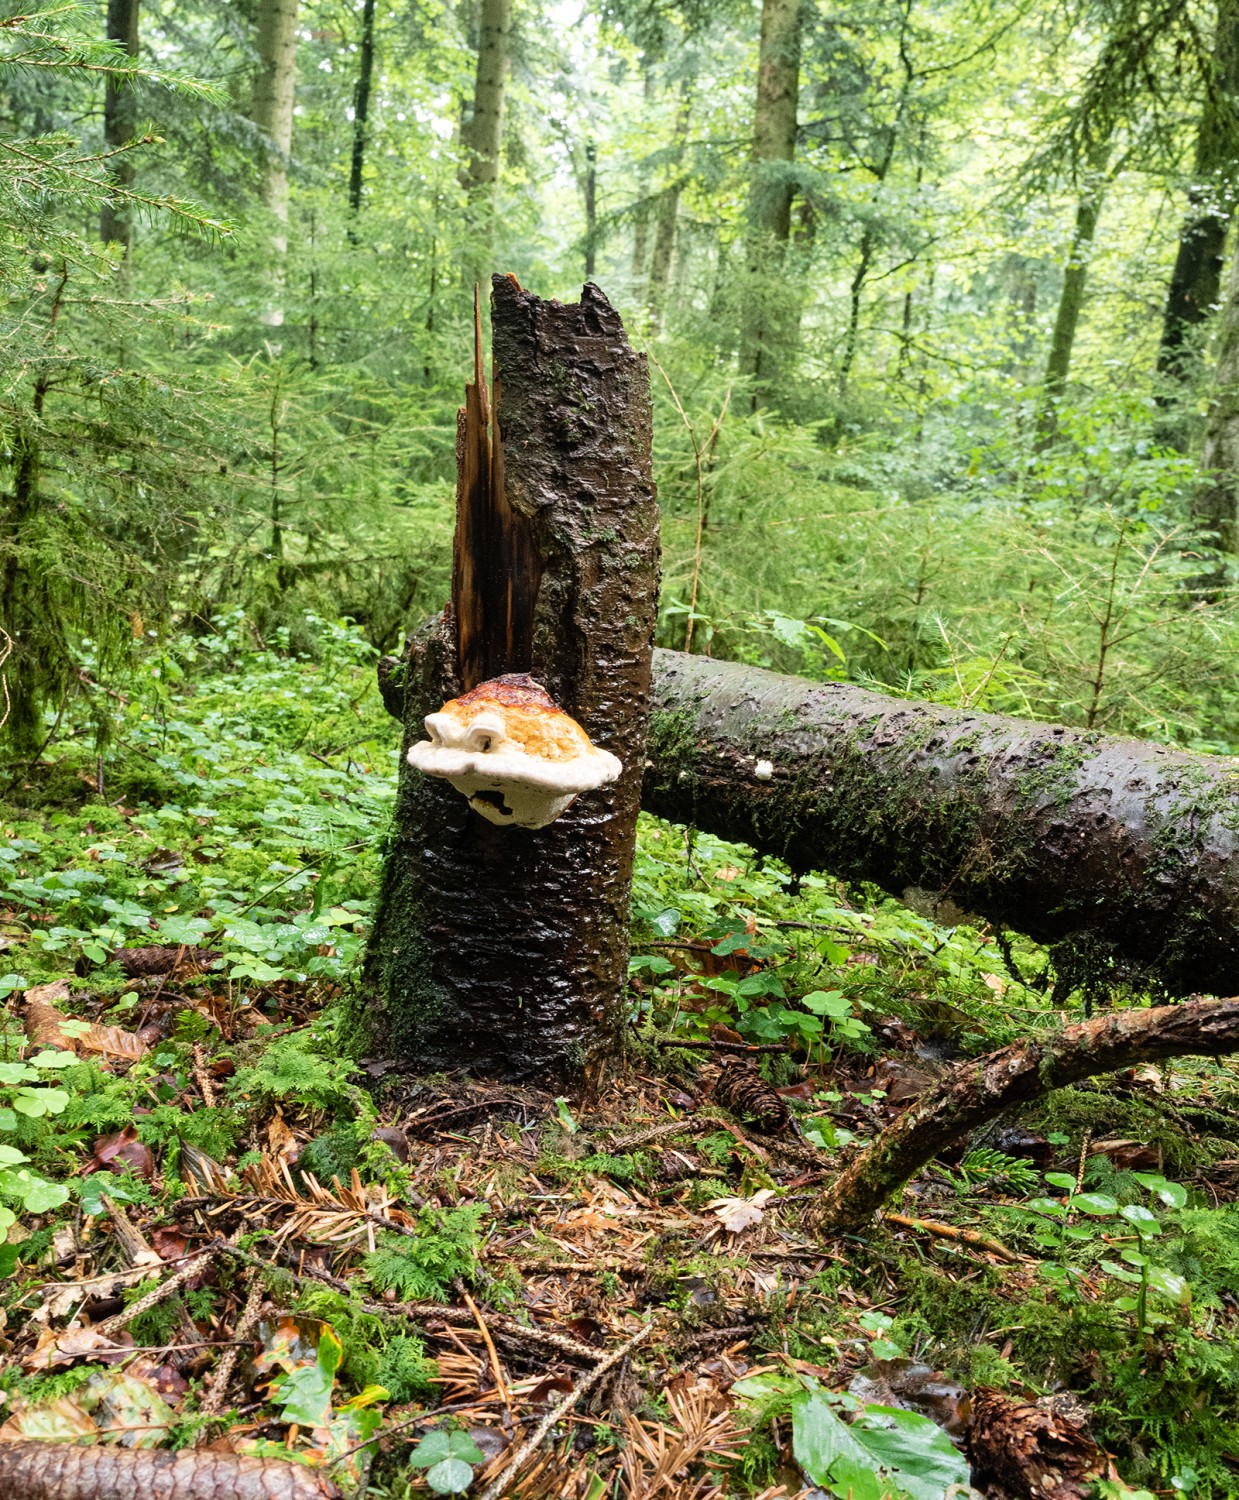 Pilze verwandeln das Altholz in fruchtbaren Boden.